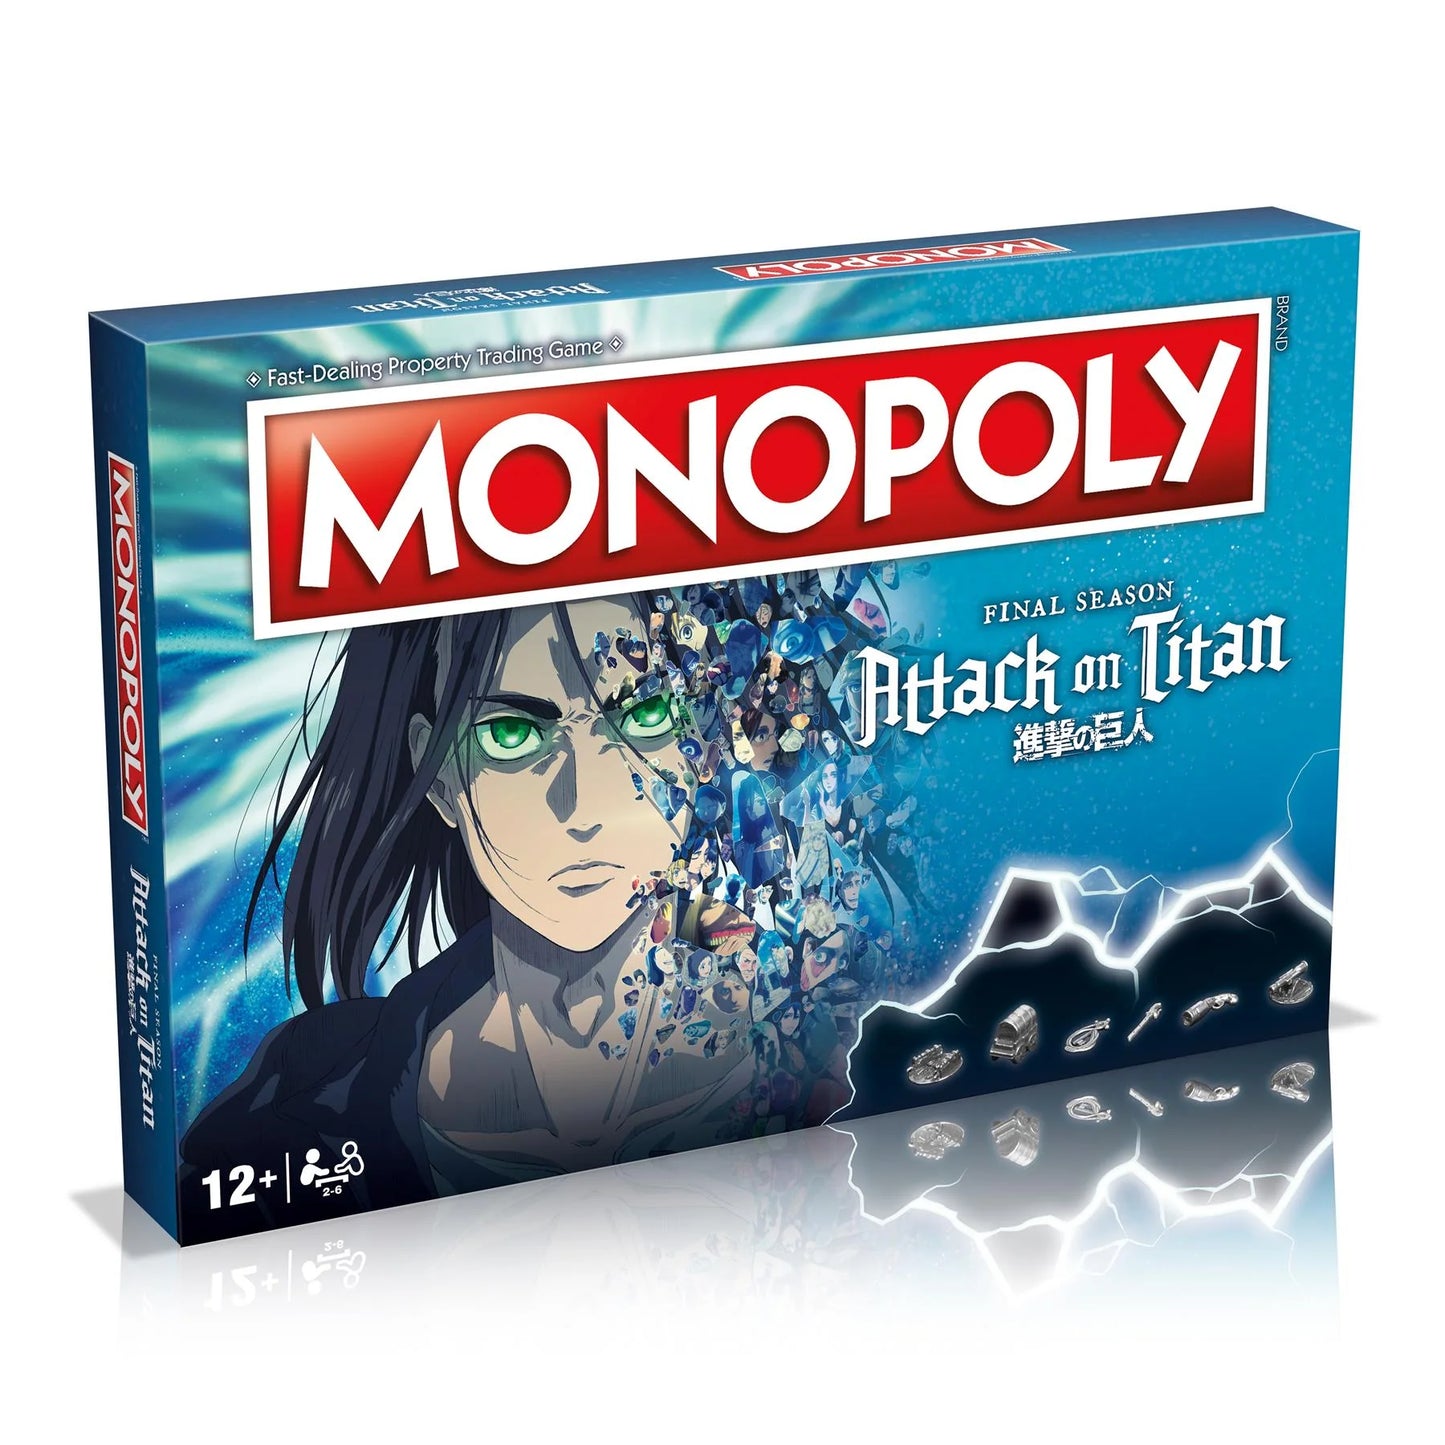 Attack on Titan: Final Season Monopoly